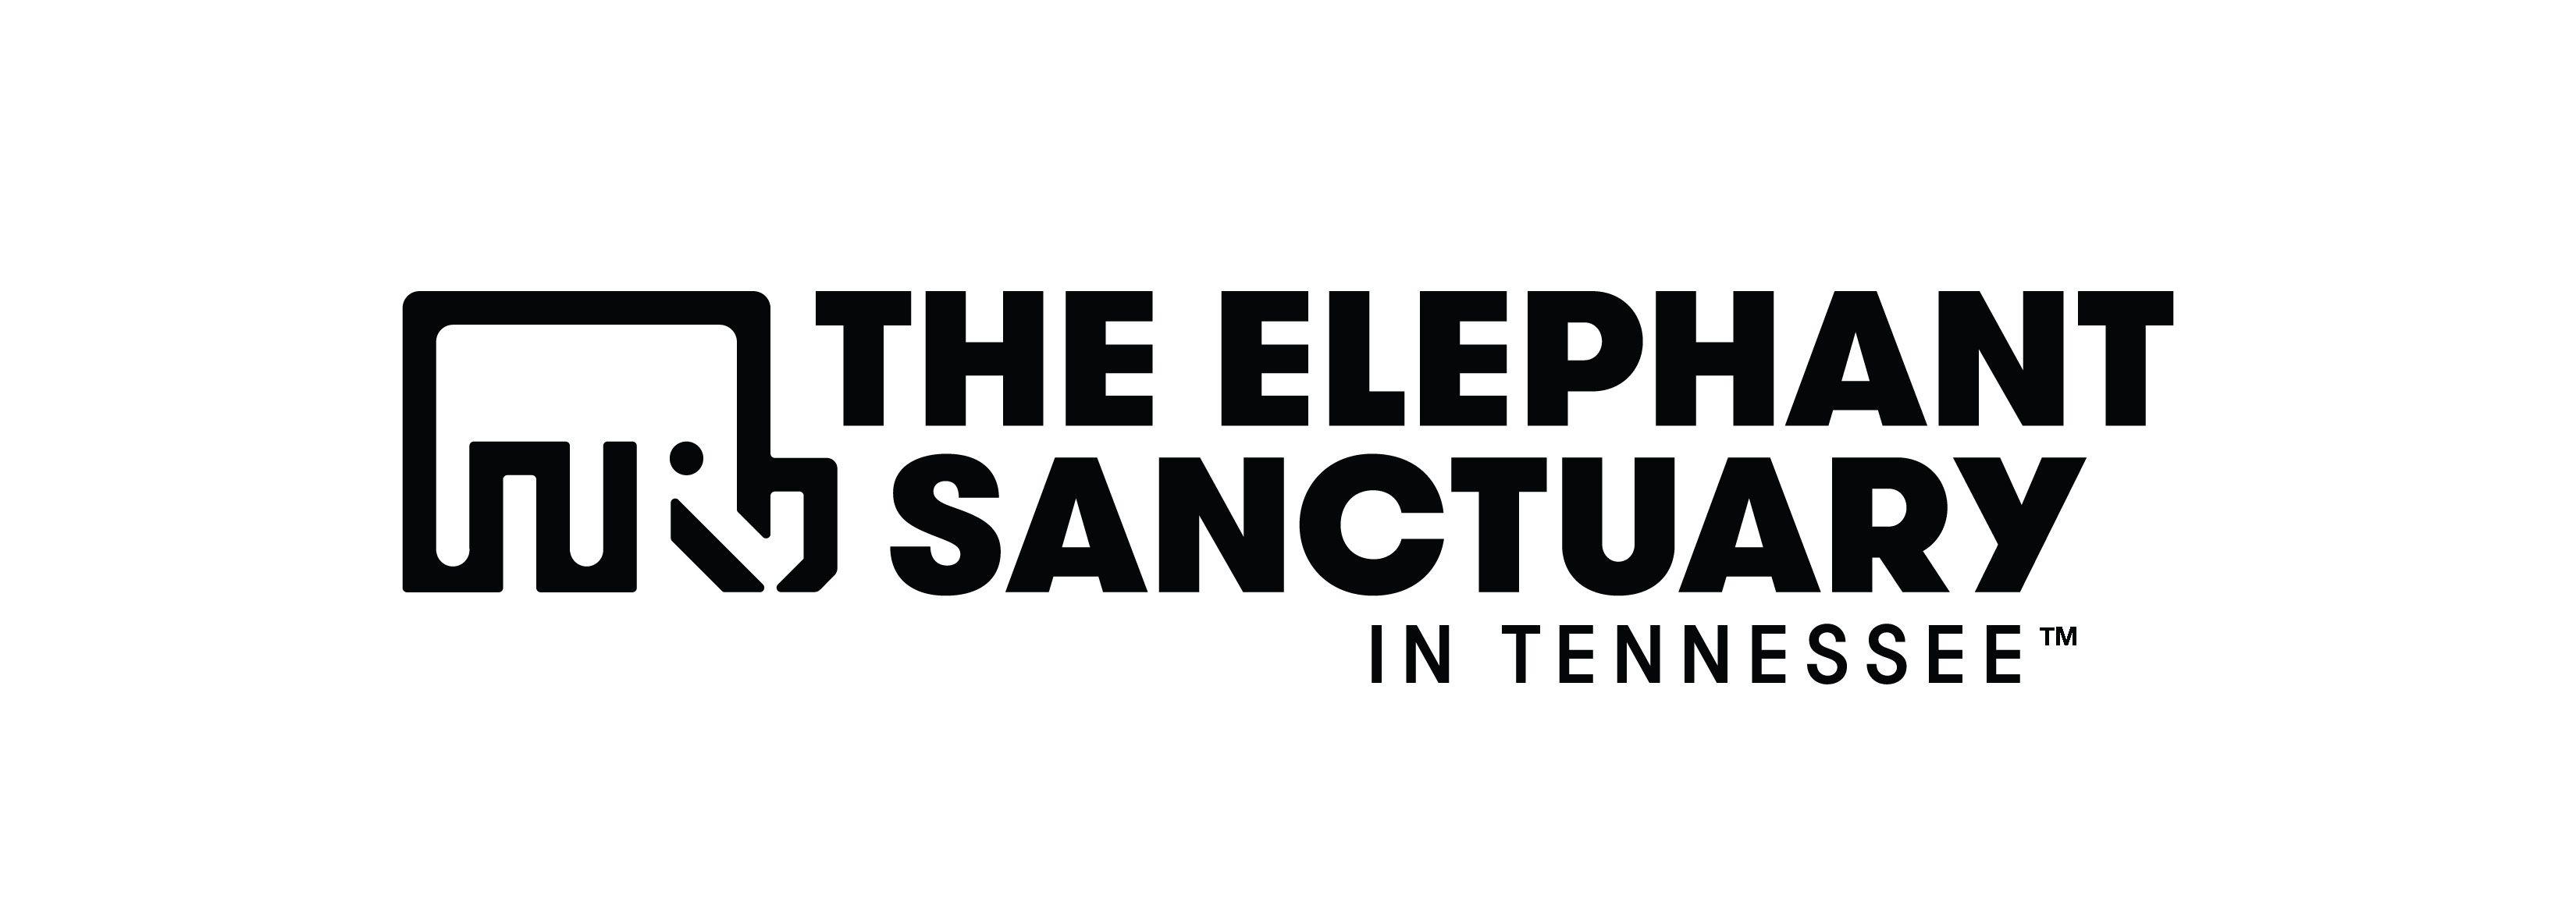 Sanctuary Logo - The Elephant Sanctuary